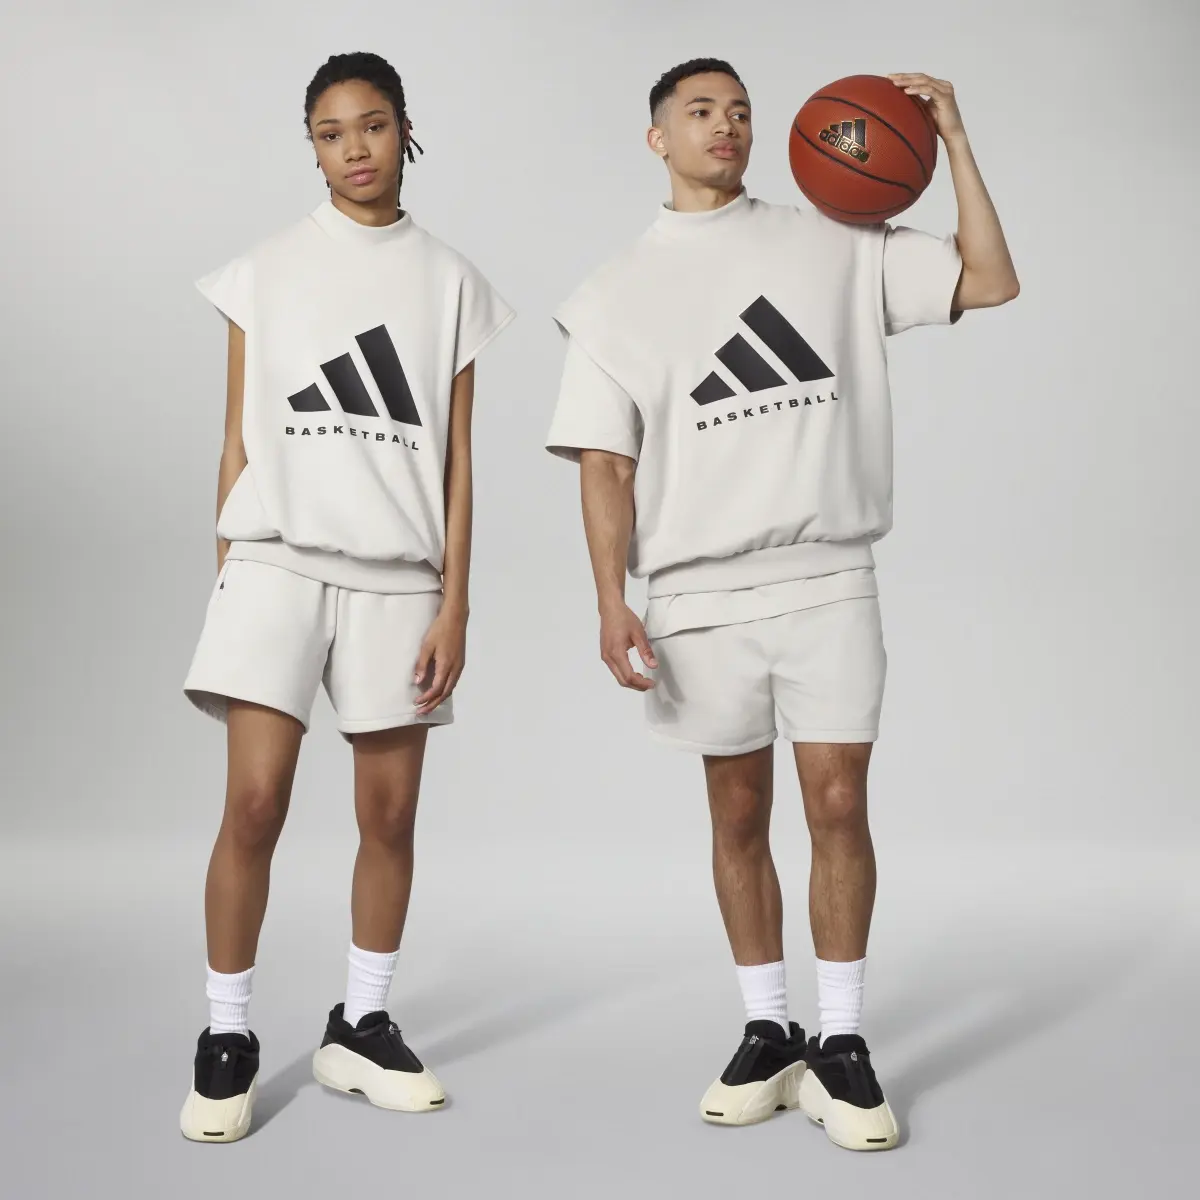 Adidas Basketball Sleeveless Sweatshirt. 1